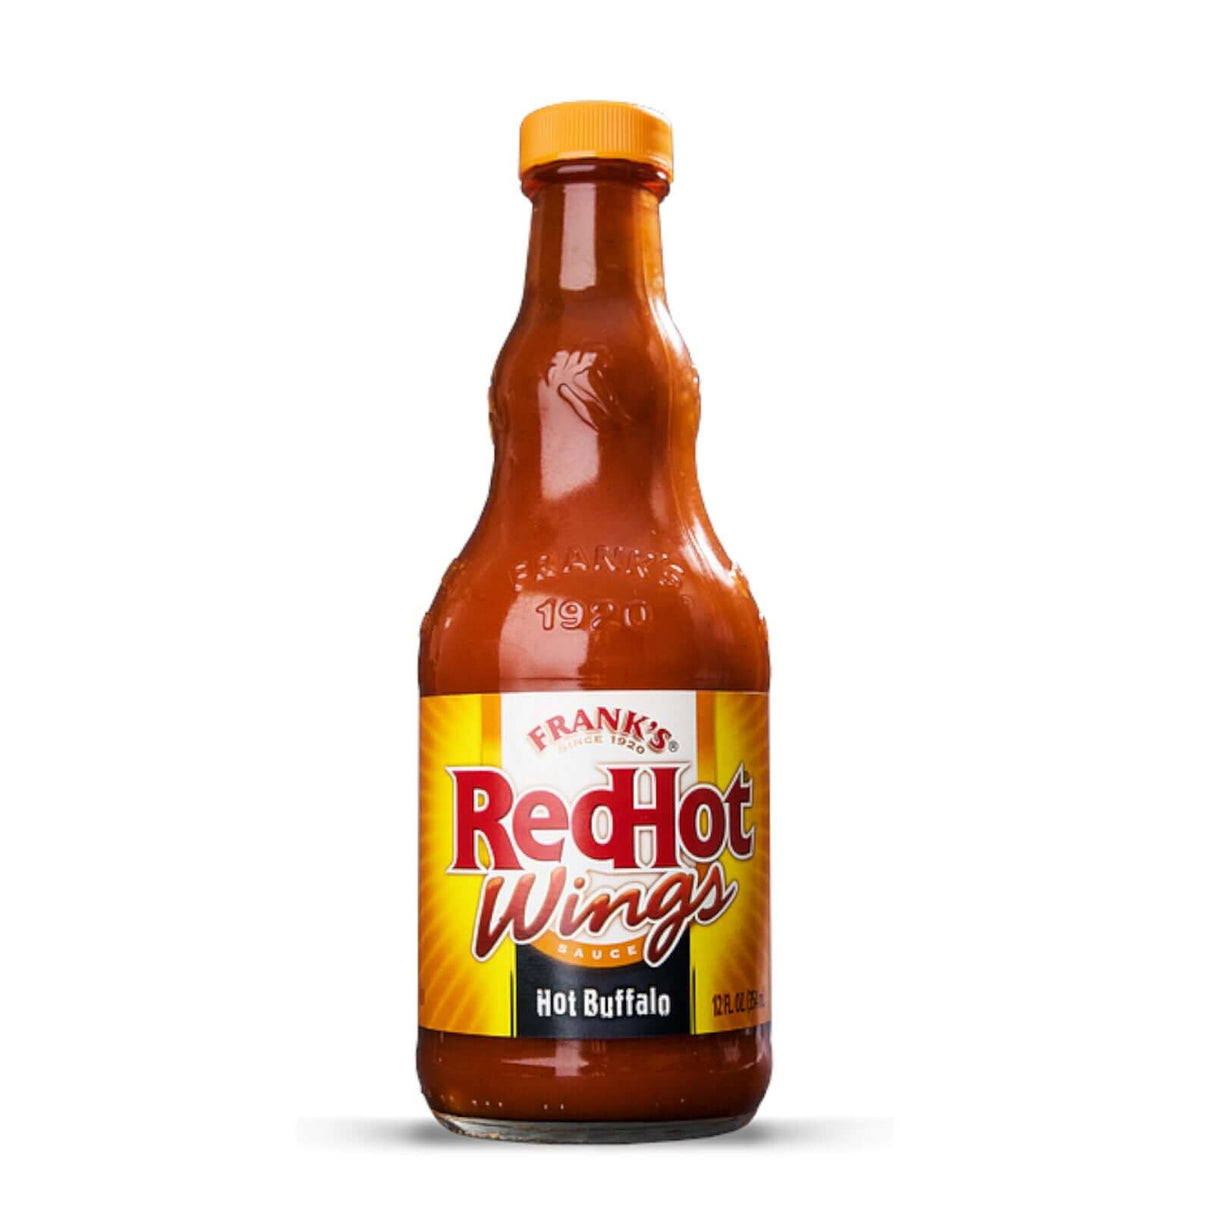 Frank's RedHot Hot Buffalo Wing Sauce